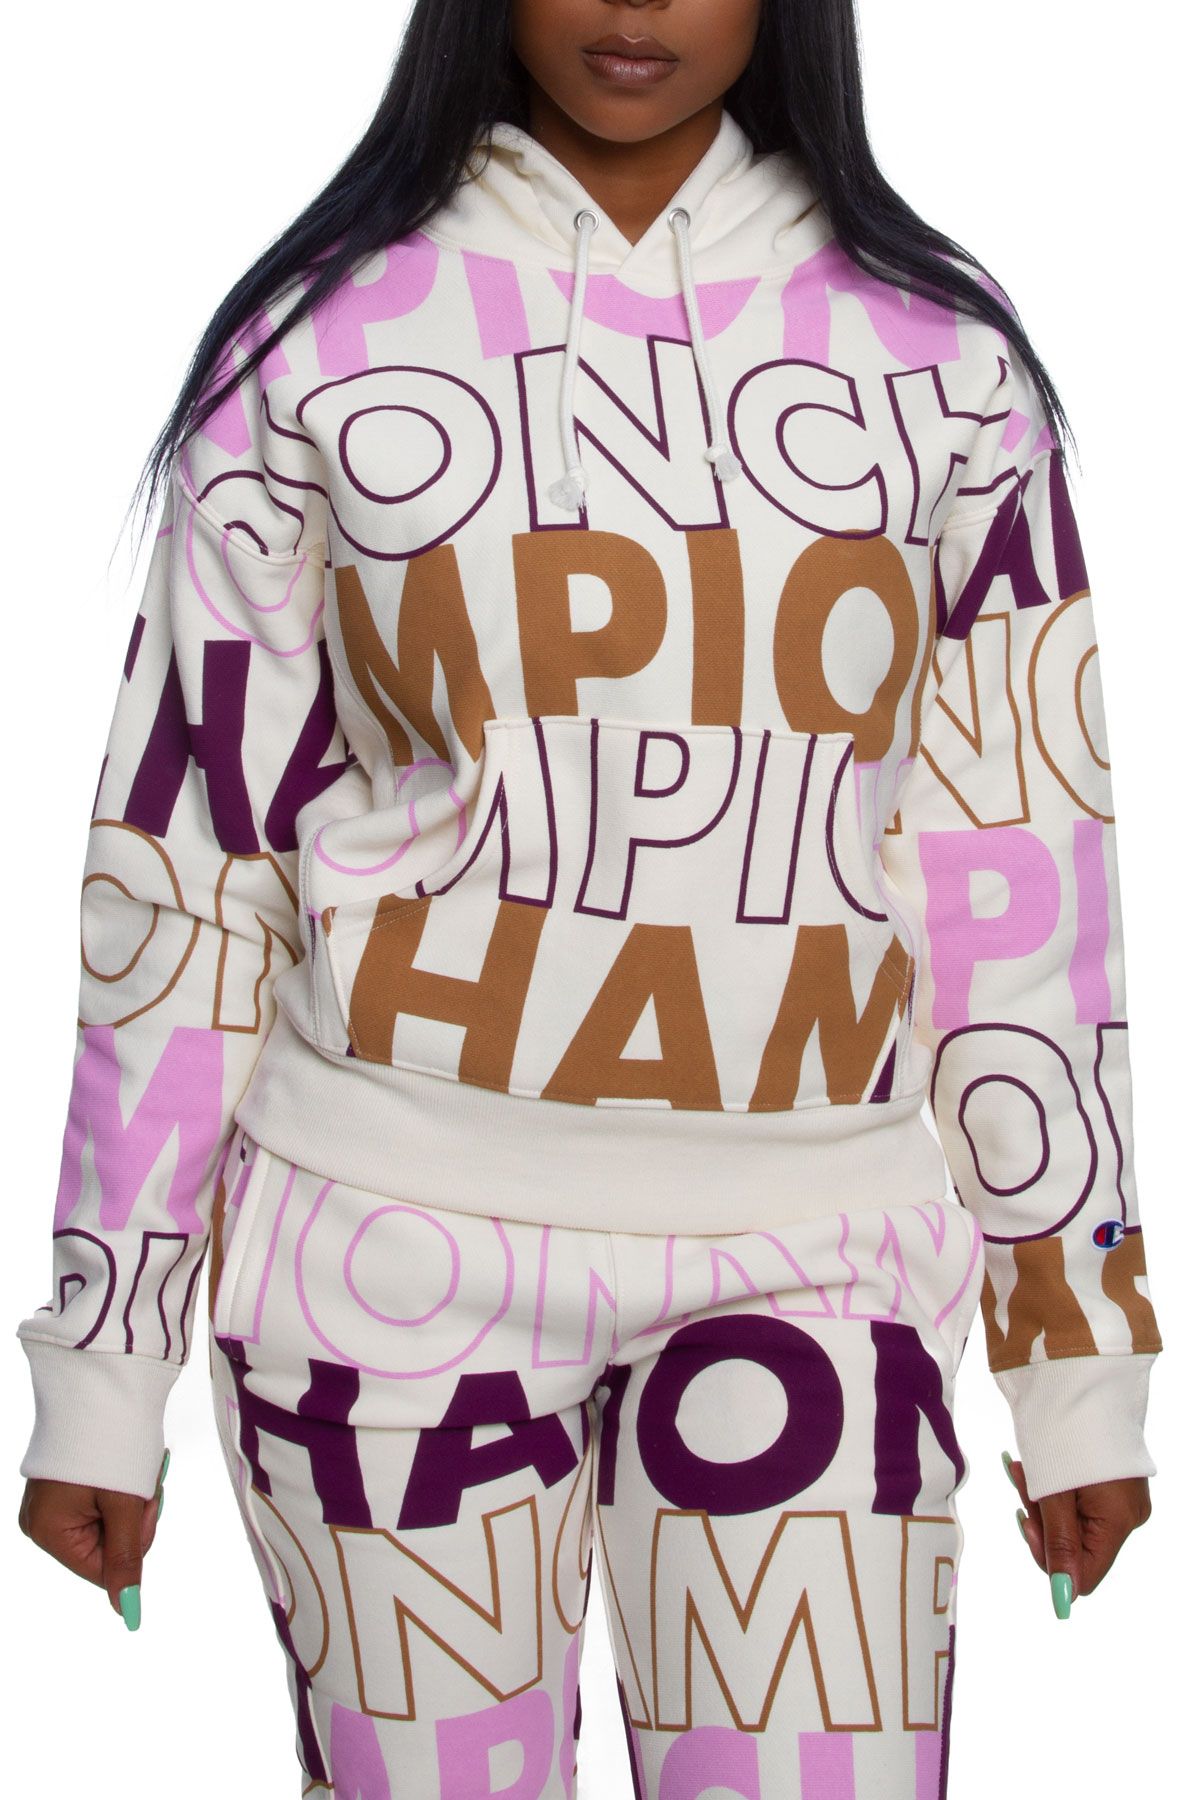 chalk pink champion hoodie